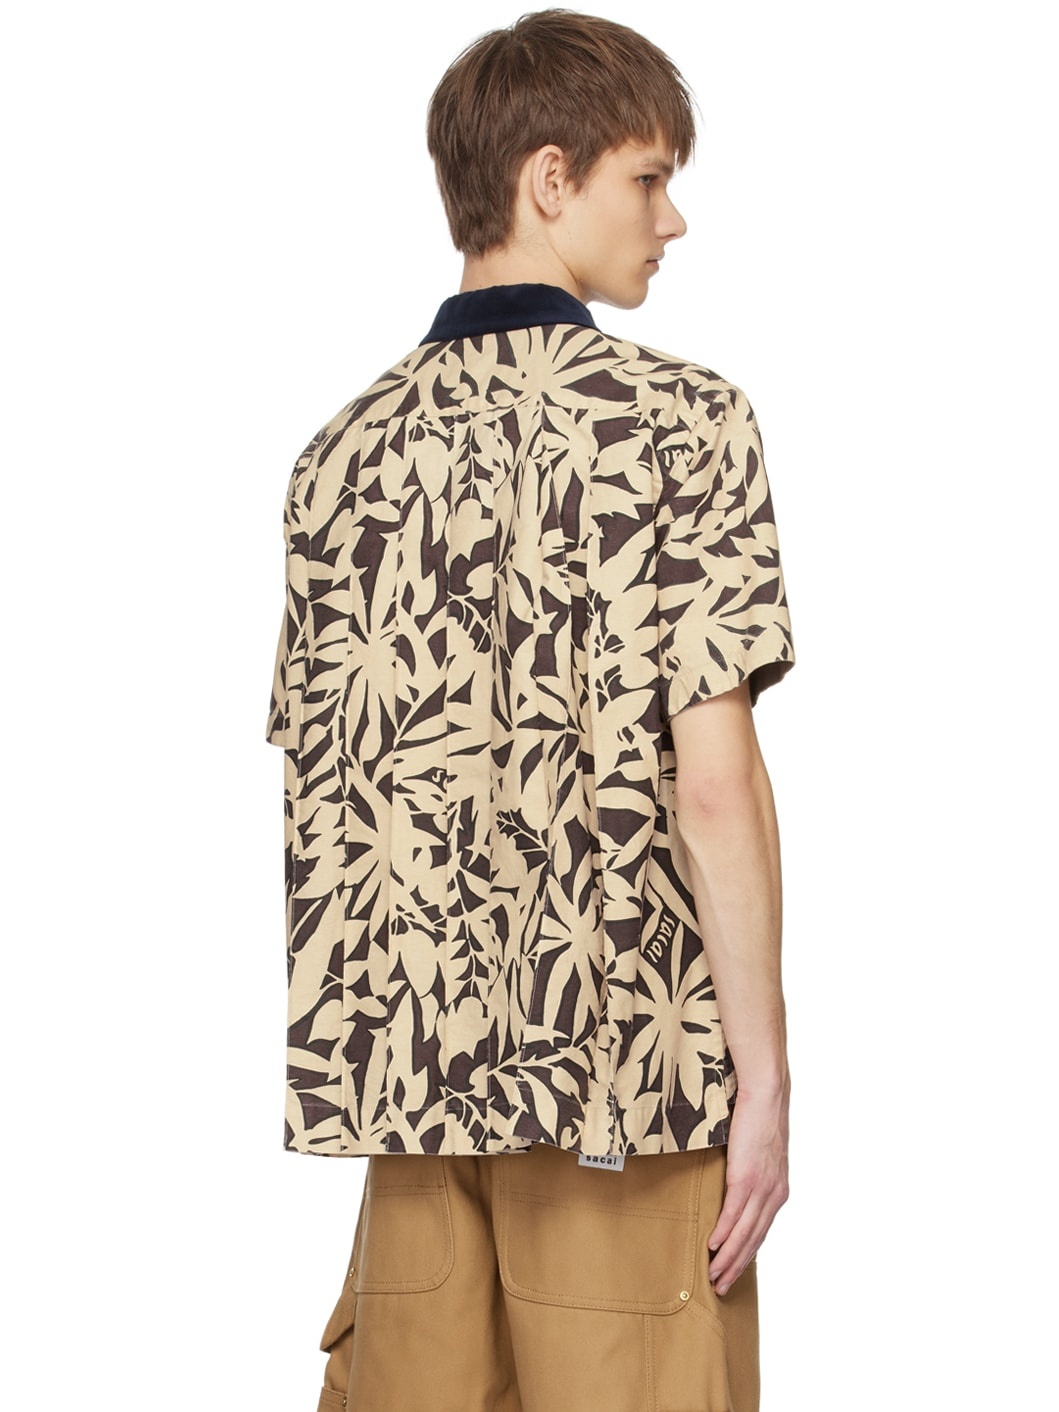 Brown & Beige Leaf Shirt - 3